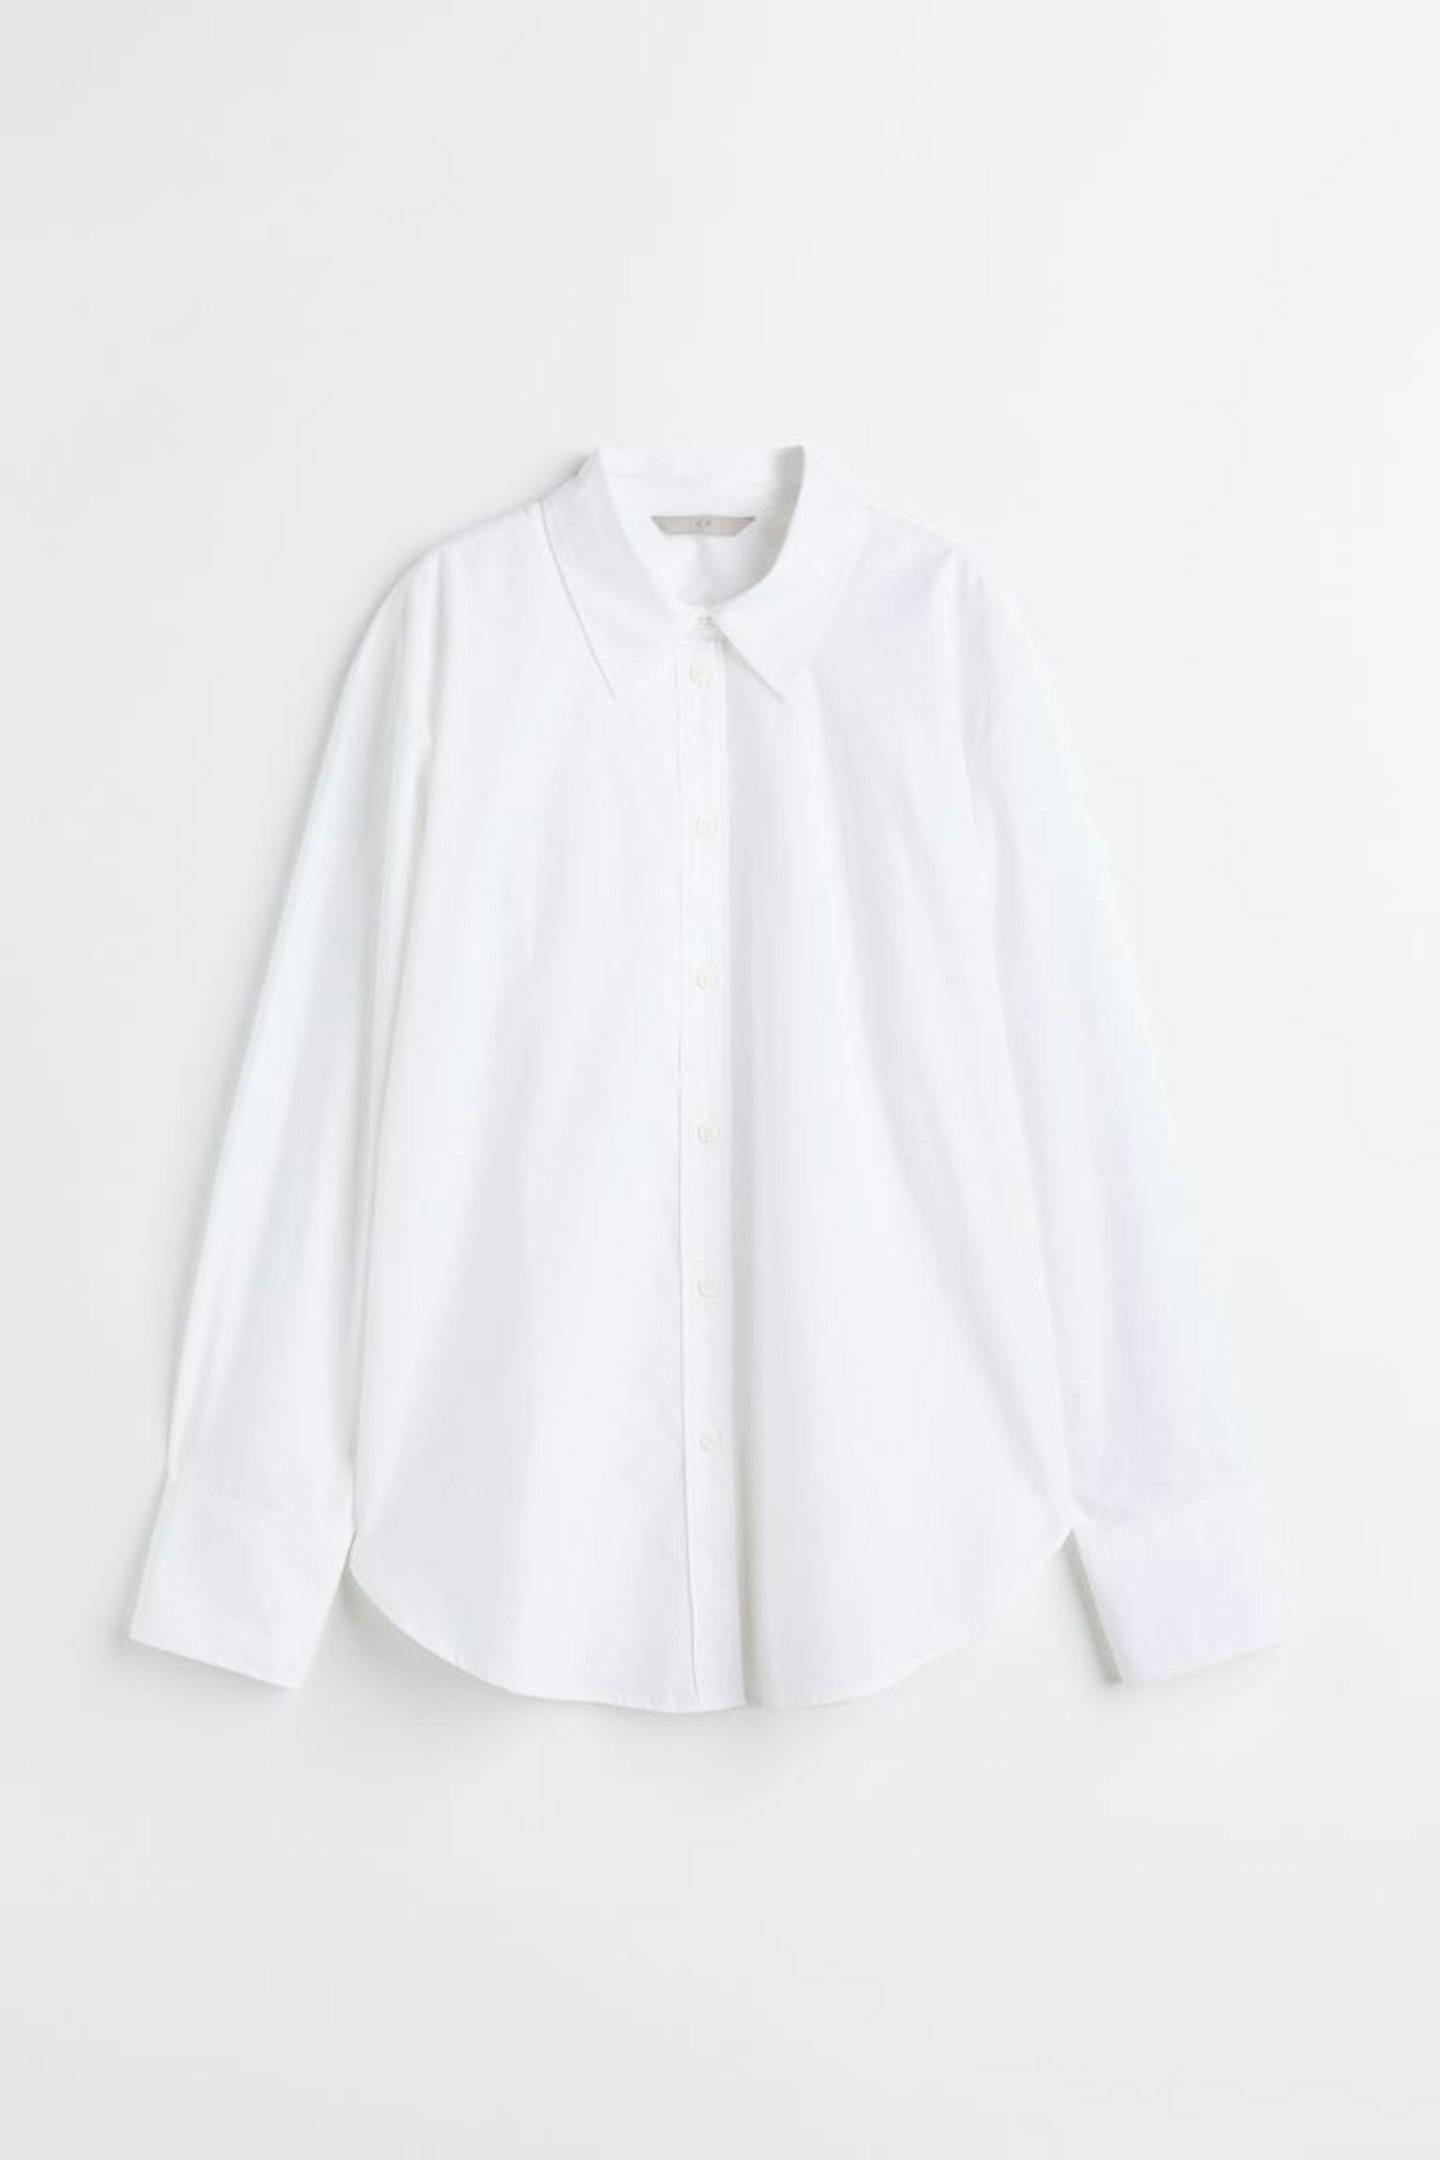 h&m white shirt 